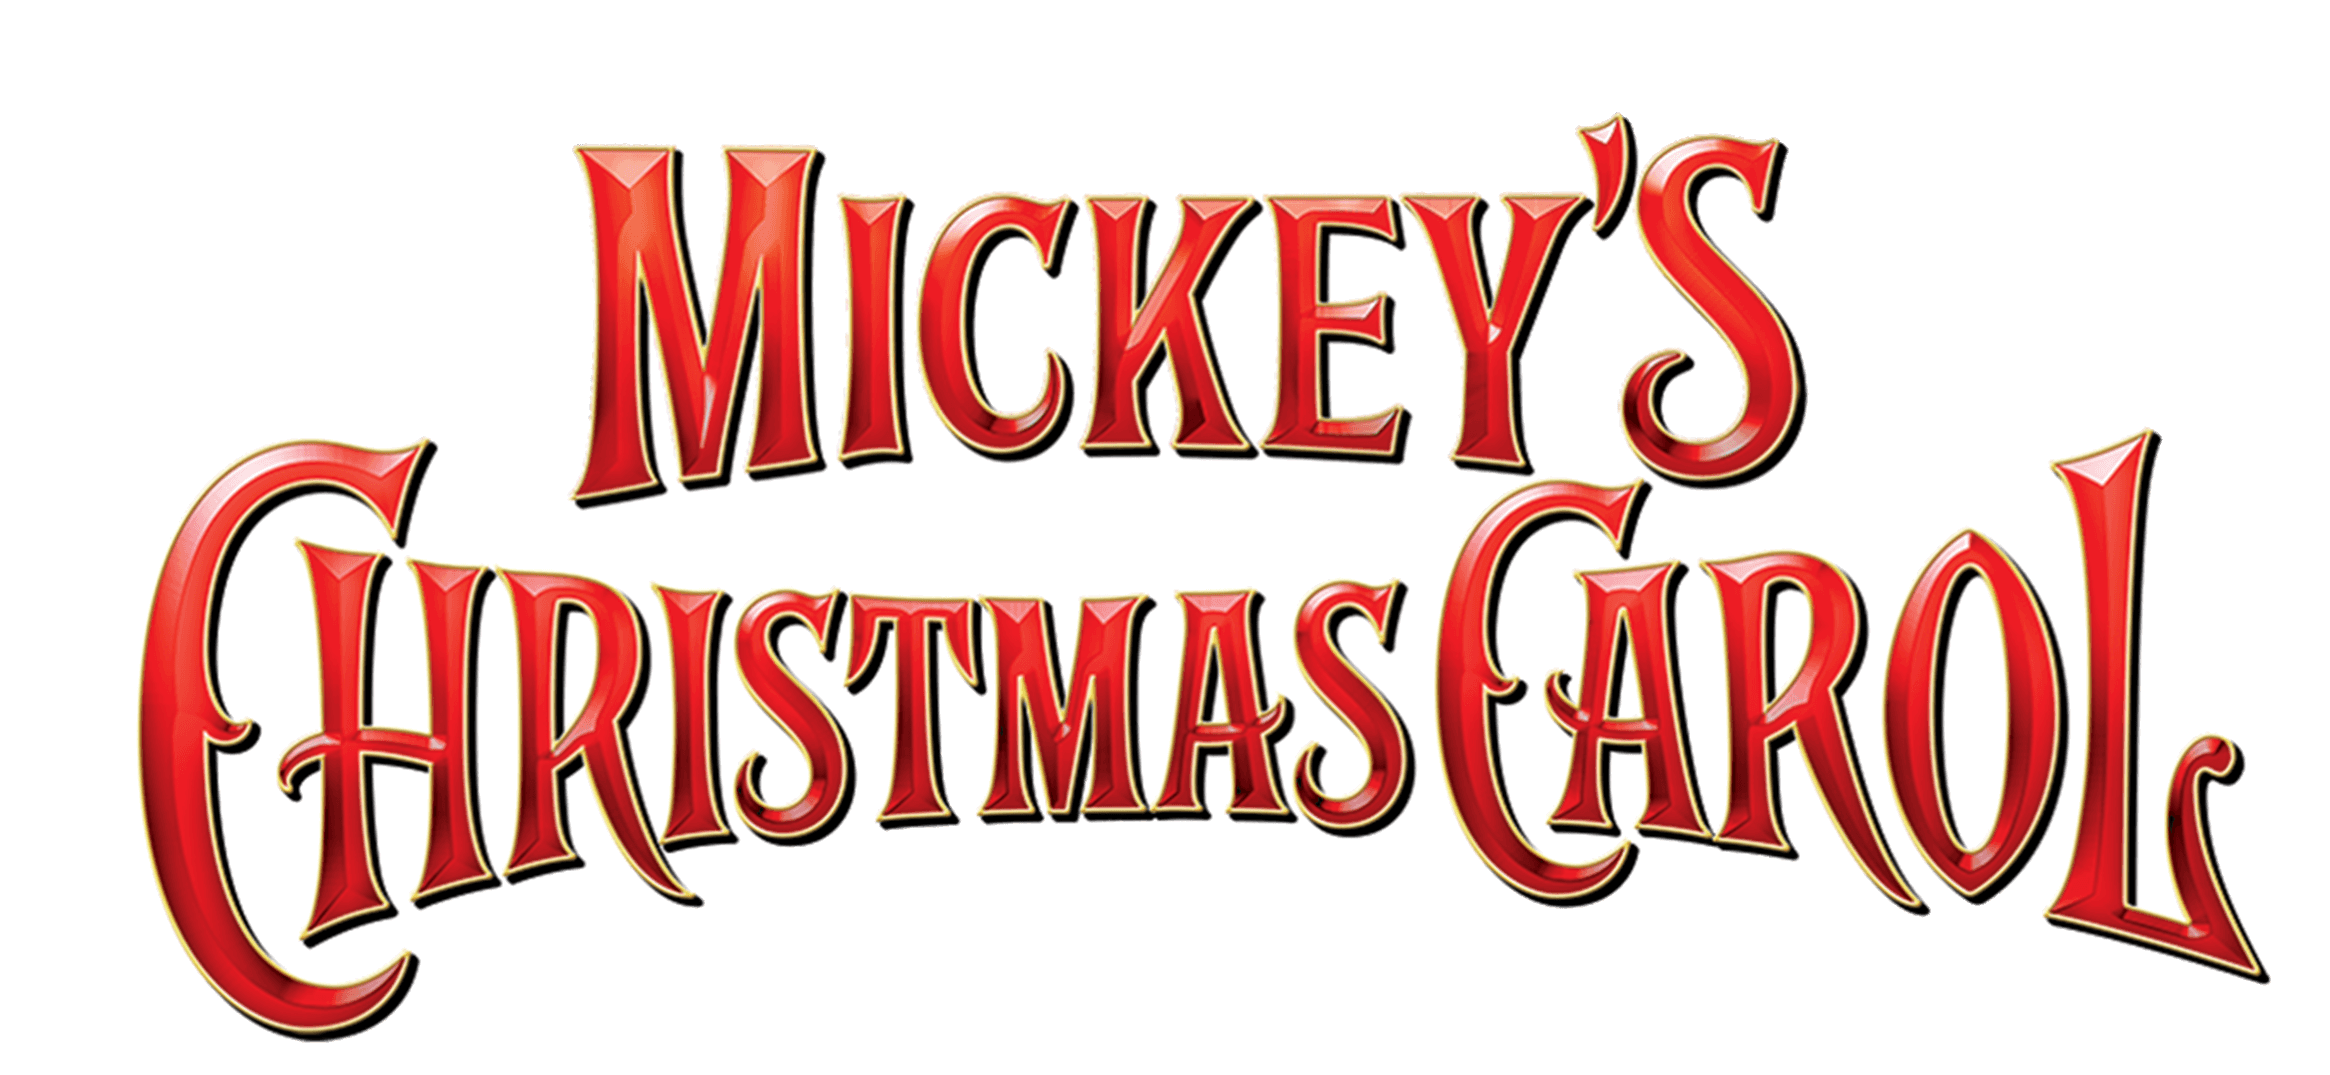 Mickey's Christmas Carol logo